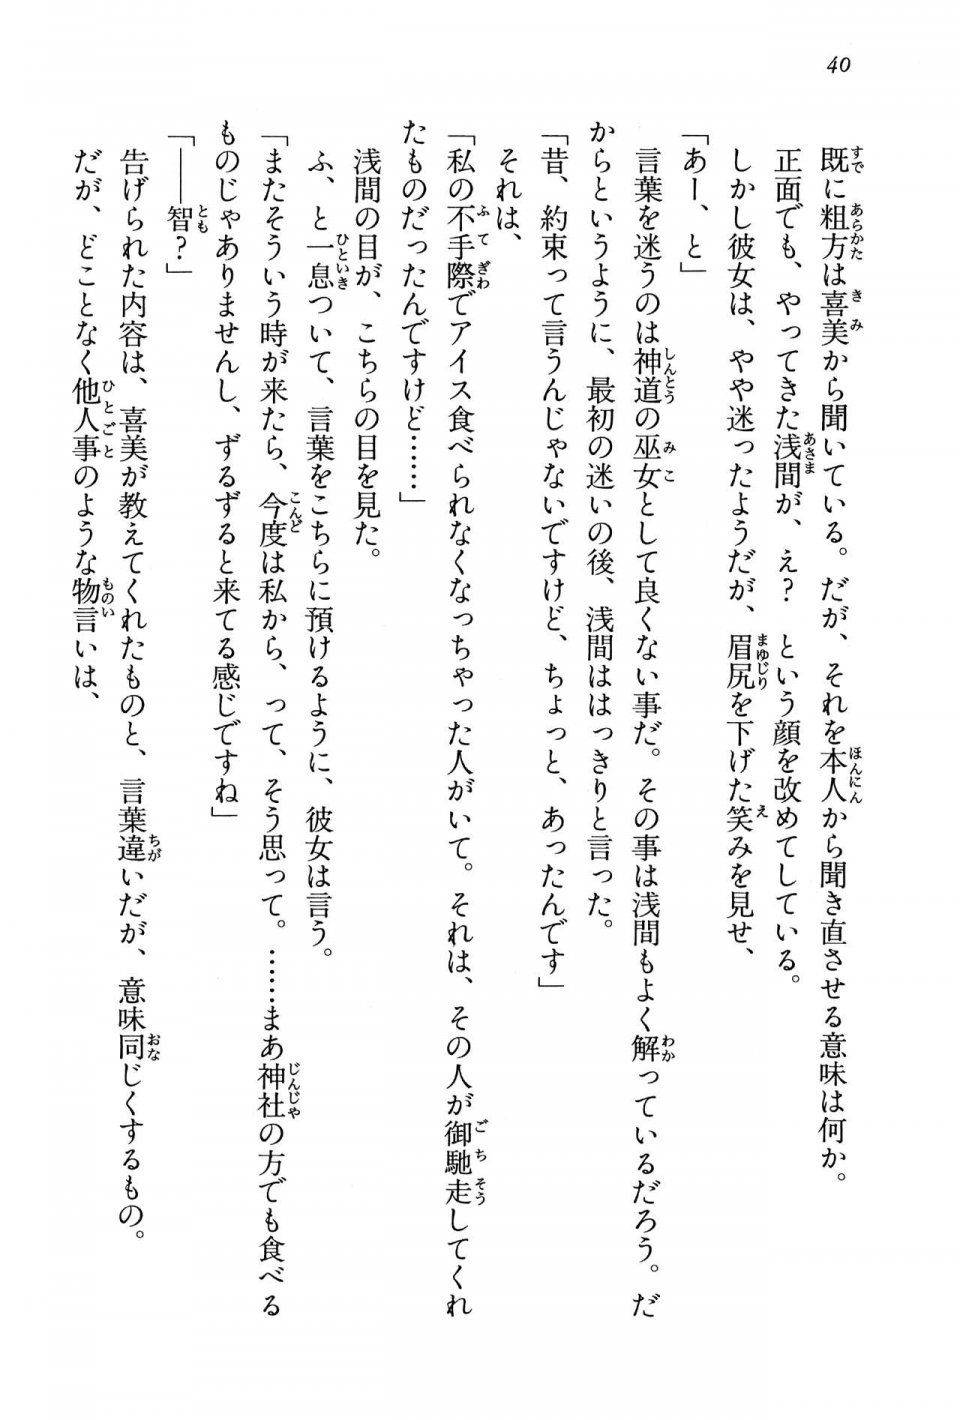 Kyoukai Senjou no Horizon BD Special Mininovel Vol 3(2A) - Photo #44